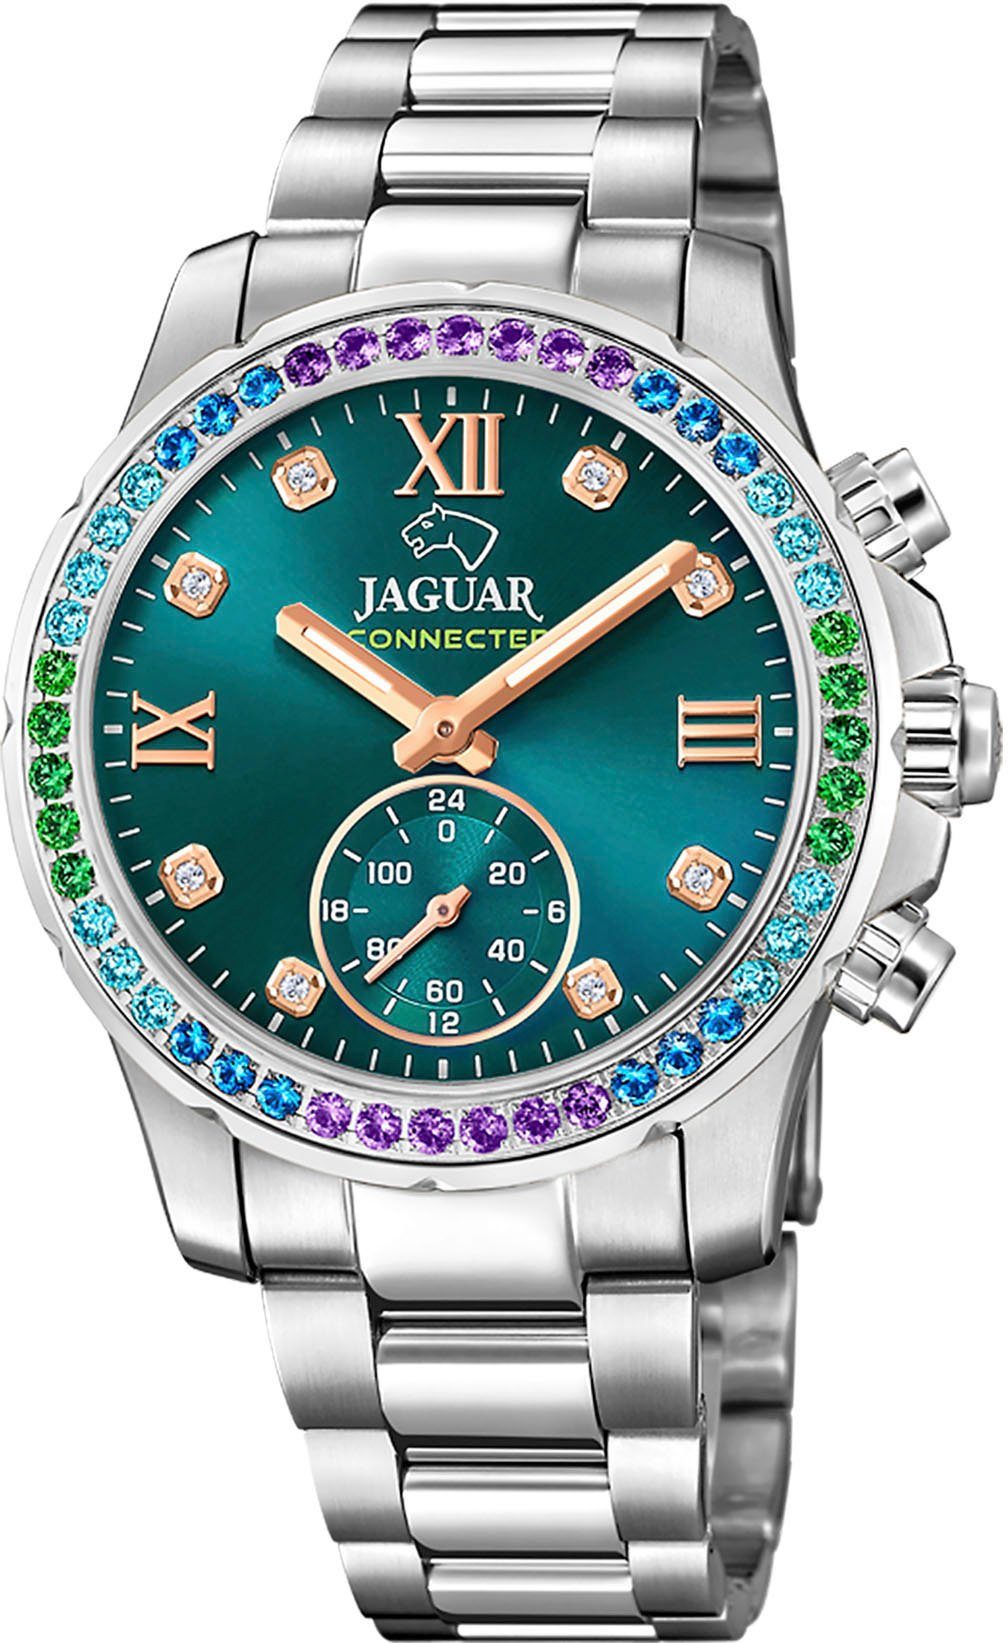 Jaguar Chronograph Connected, J980/6, Armbanduhr, Damenuhr, Saphirglas, Stoppfunktion, Swiss Made